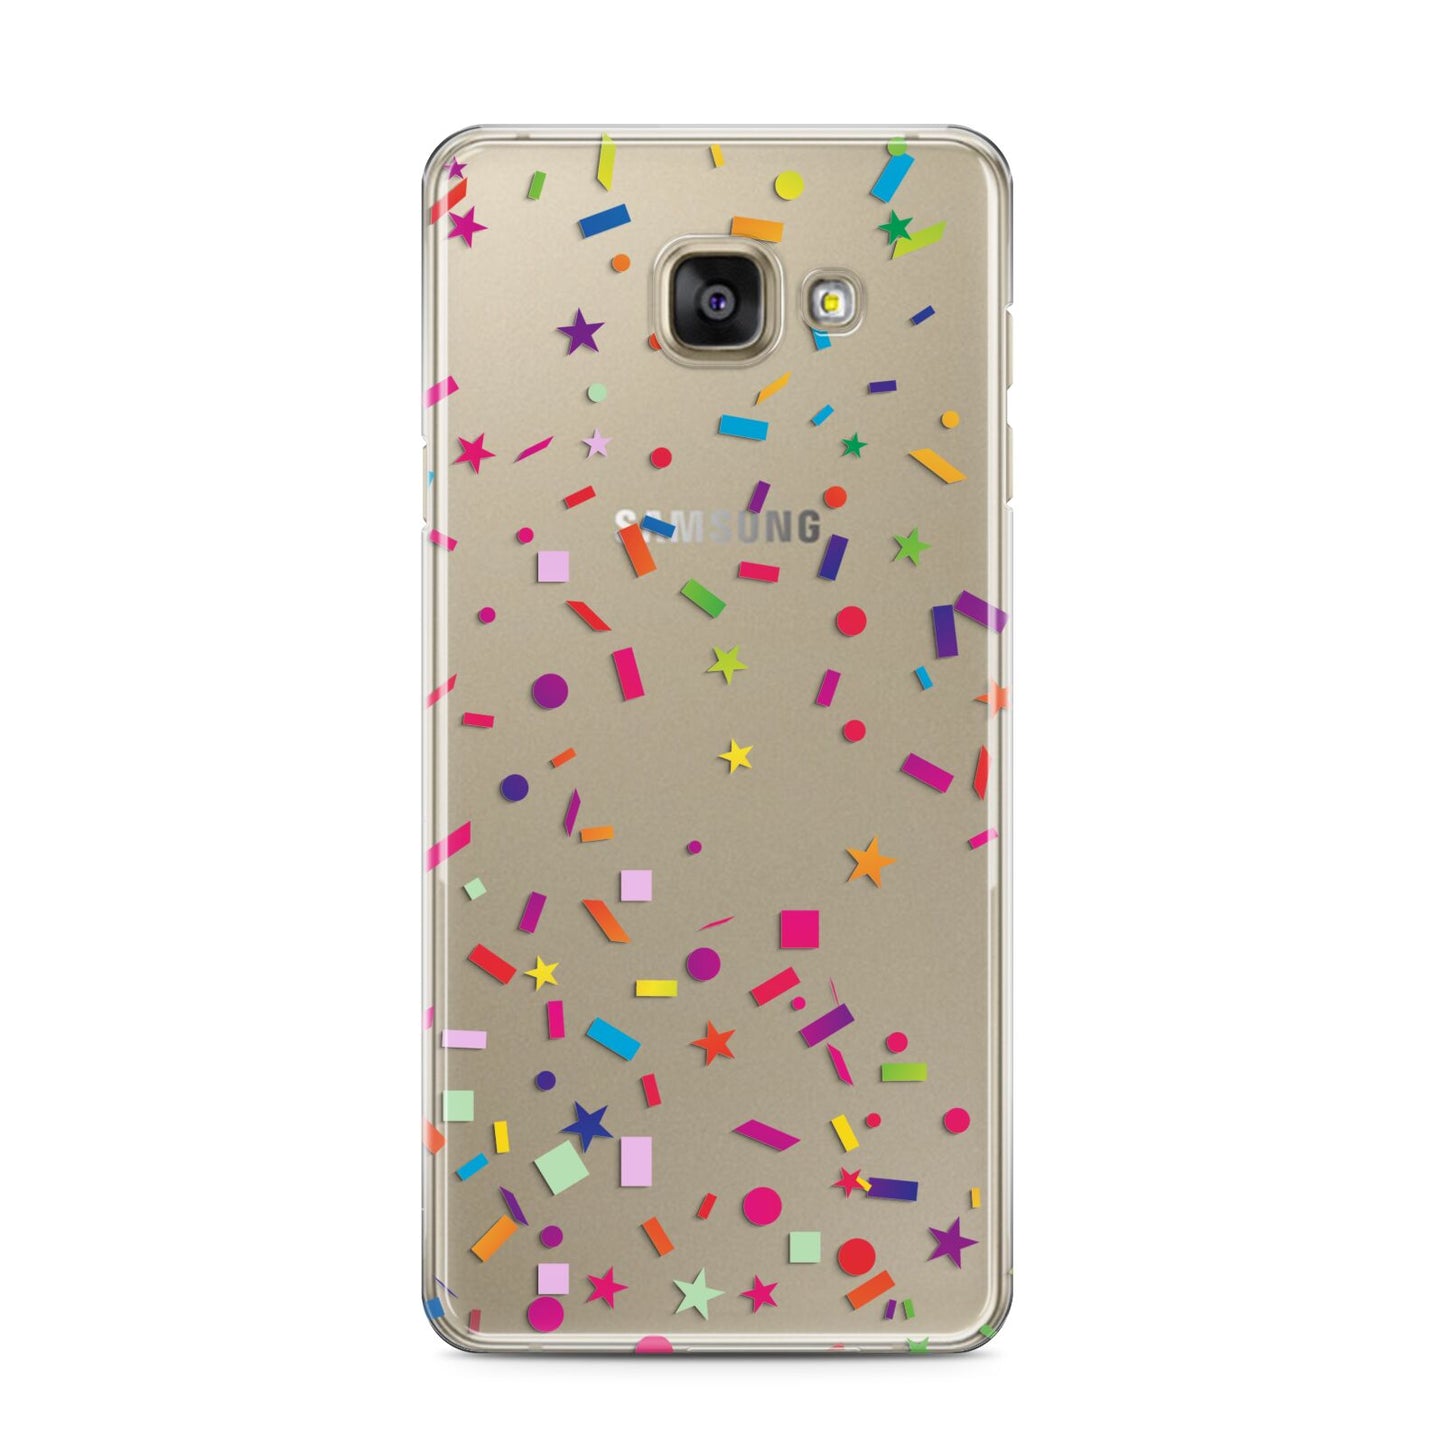 Confetti Samsung Galaxy A3 2016 Case on gold phone